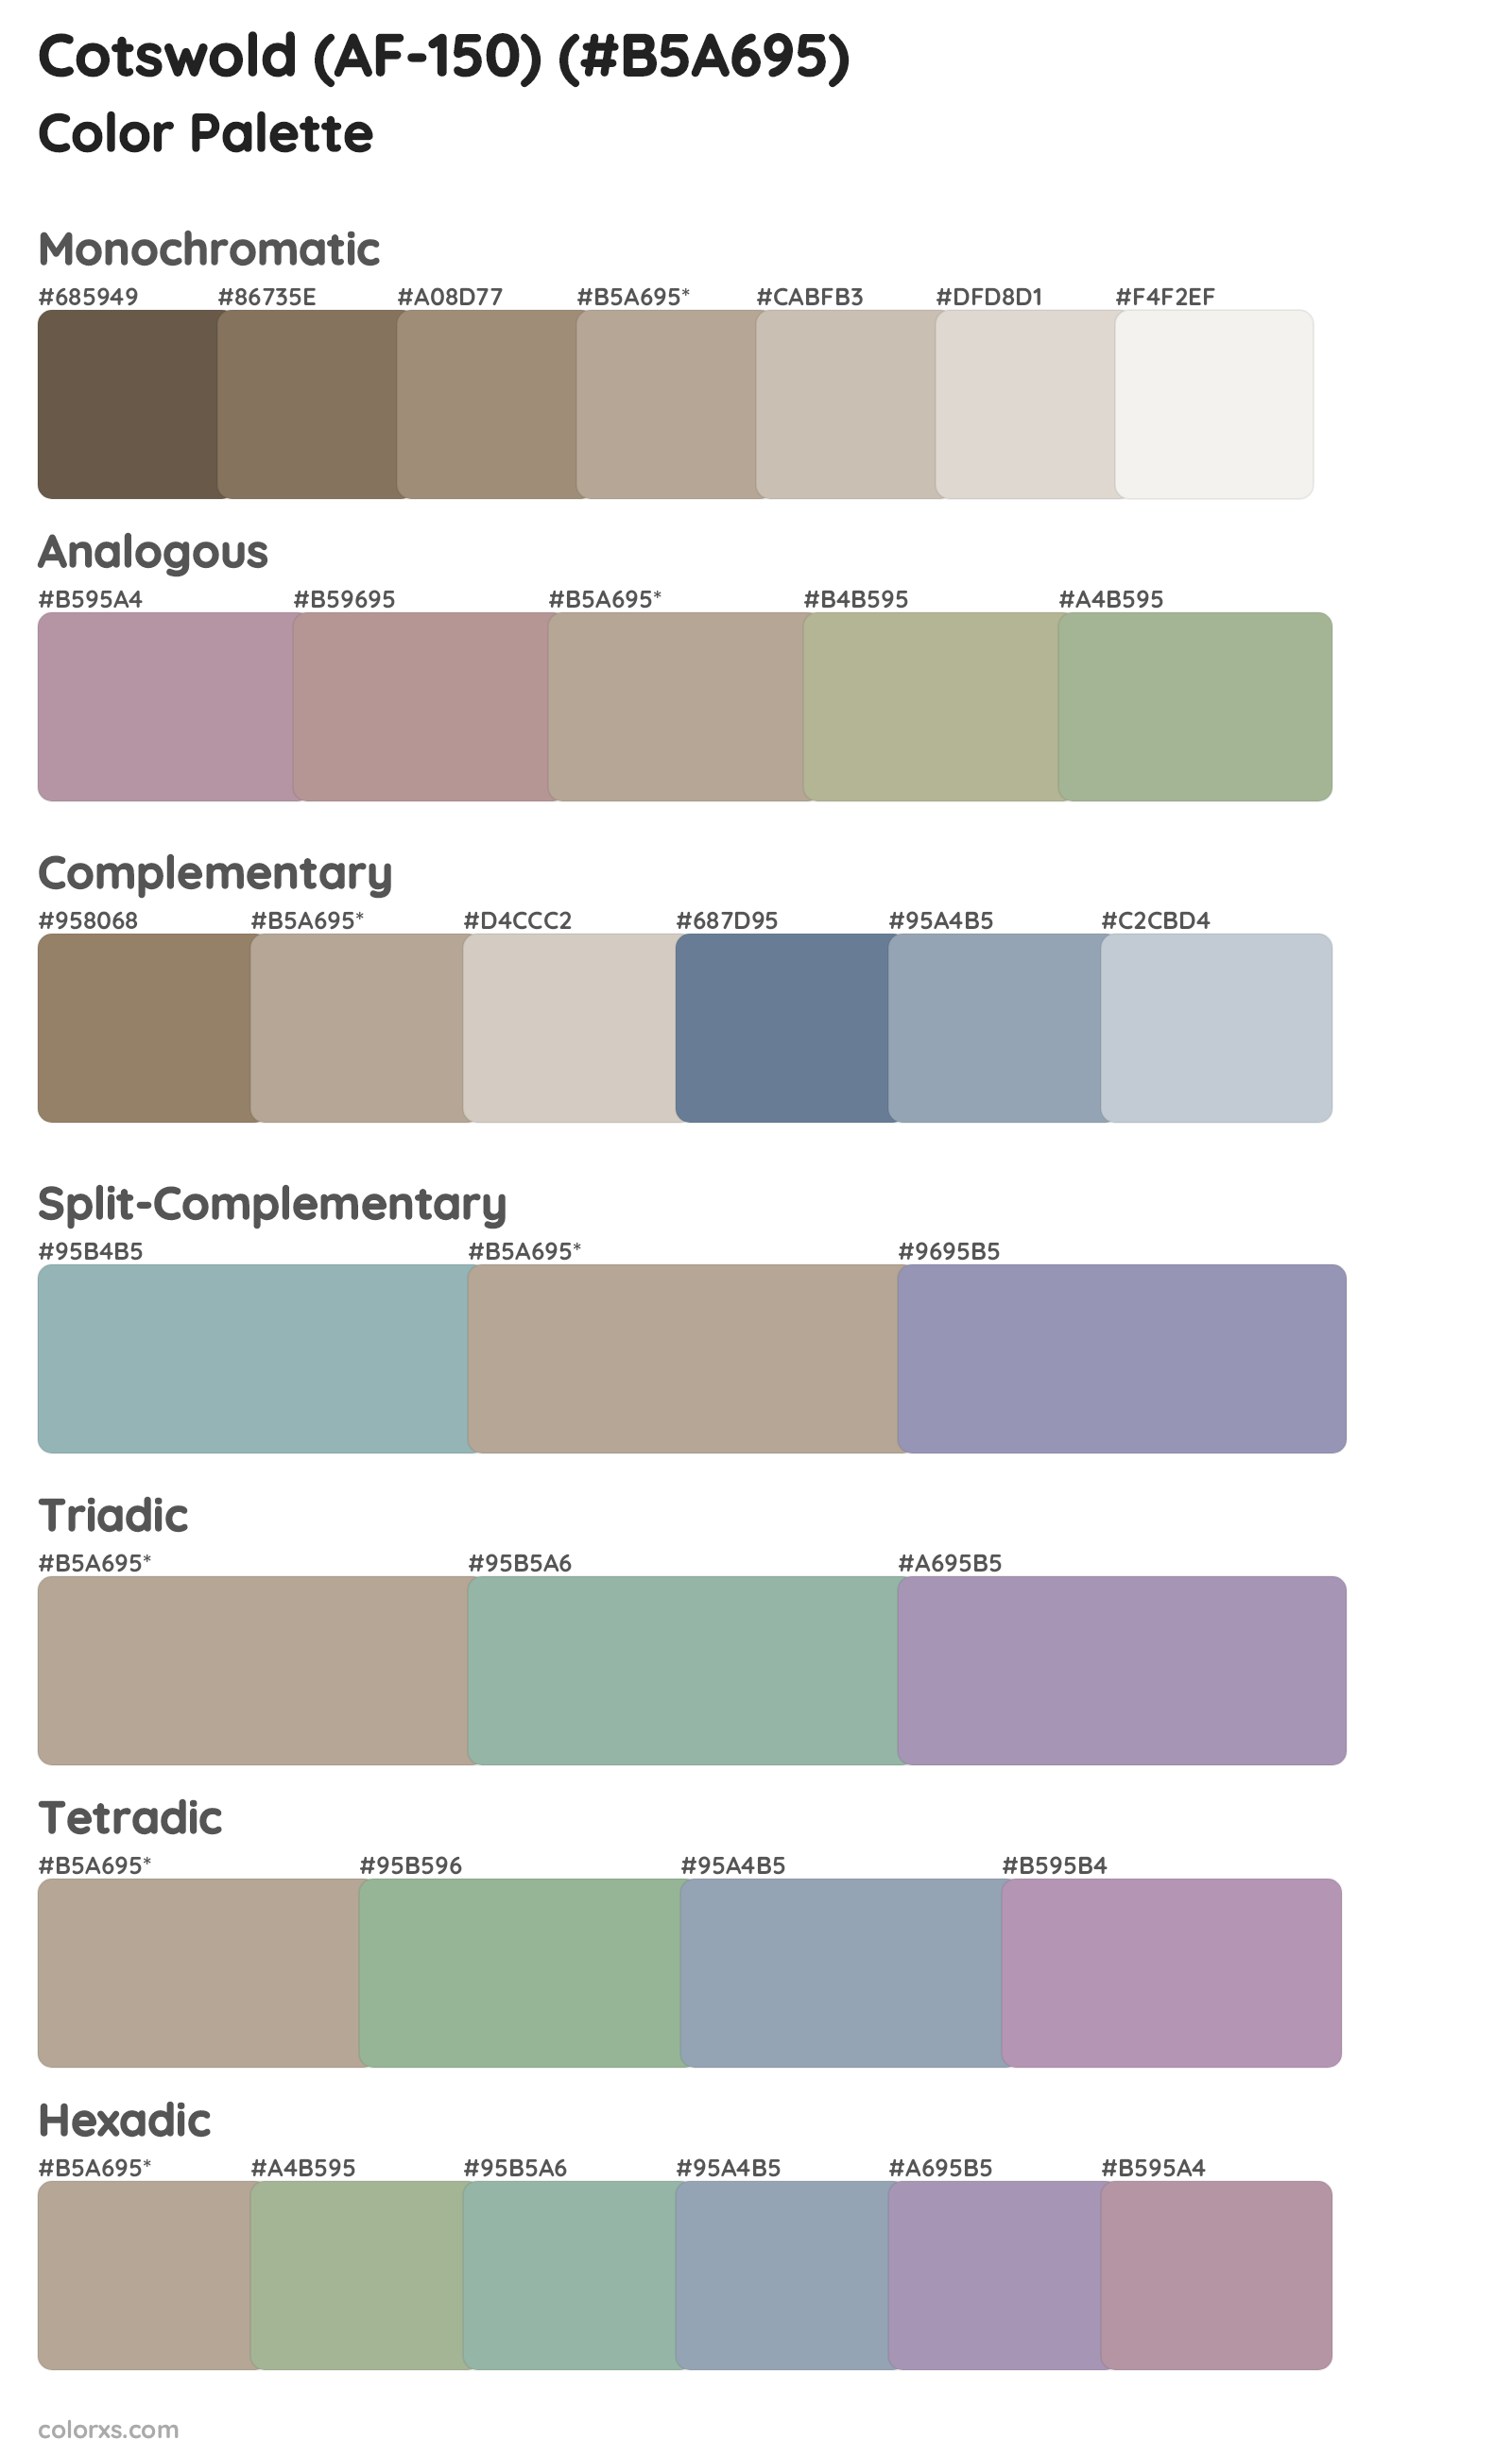 Cotswold (AF-150) Color Scheme Palettes